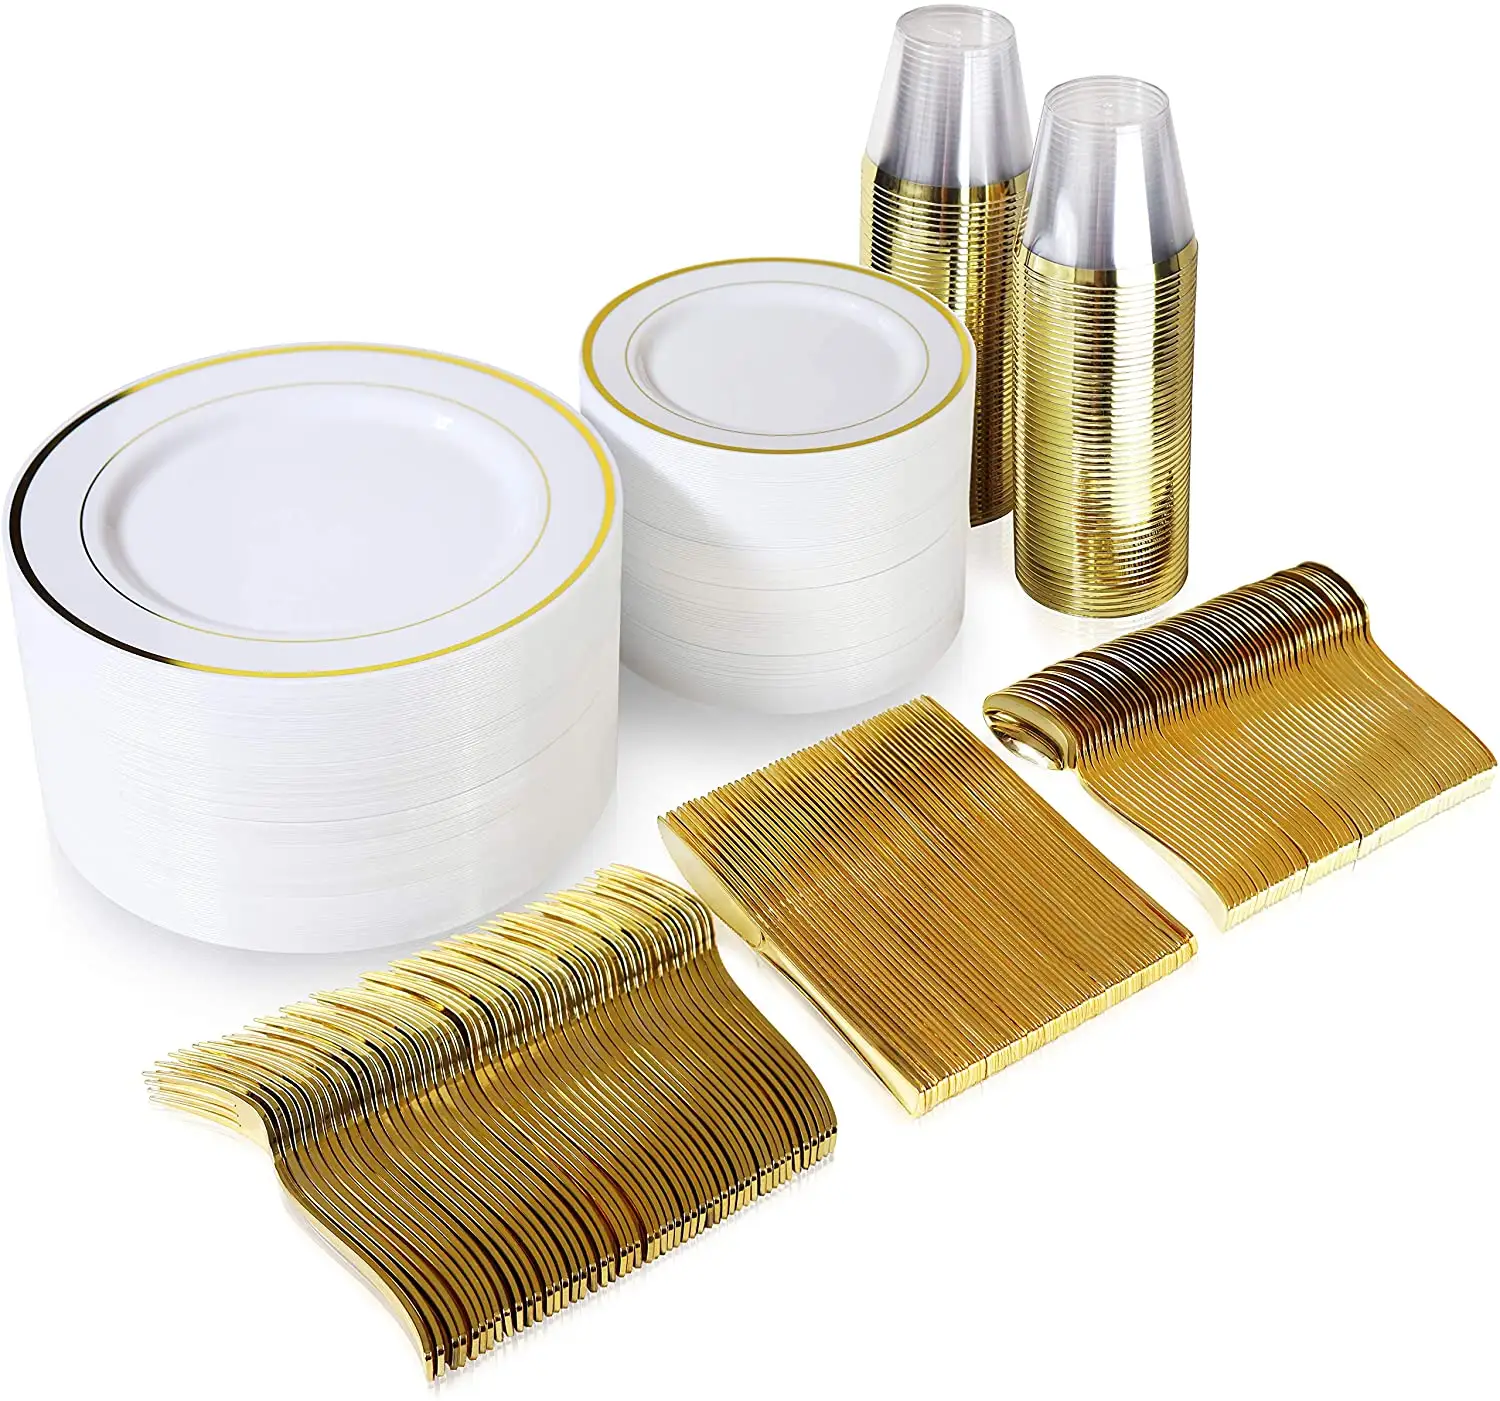 Disposable 600 Pieces Gold Plastic Plates Dinnerware Sets